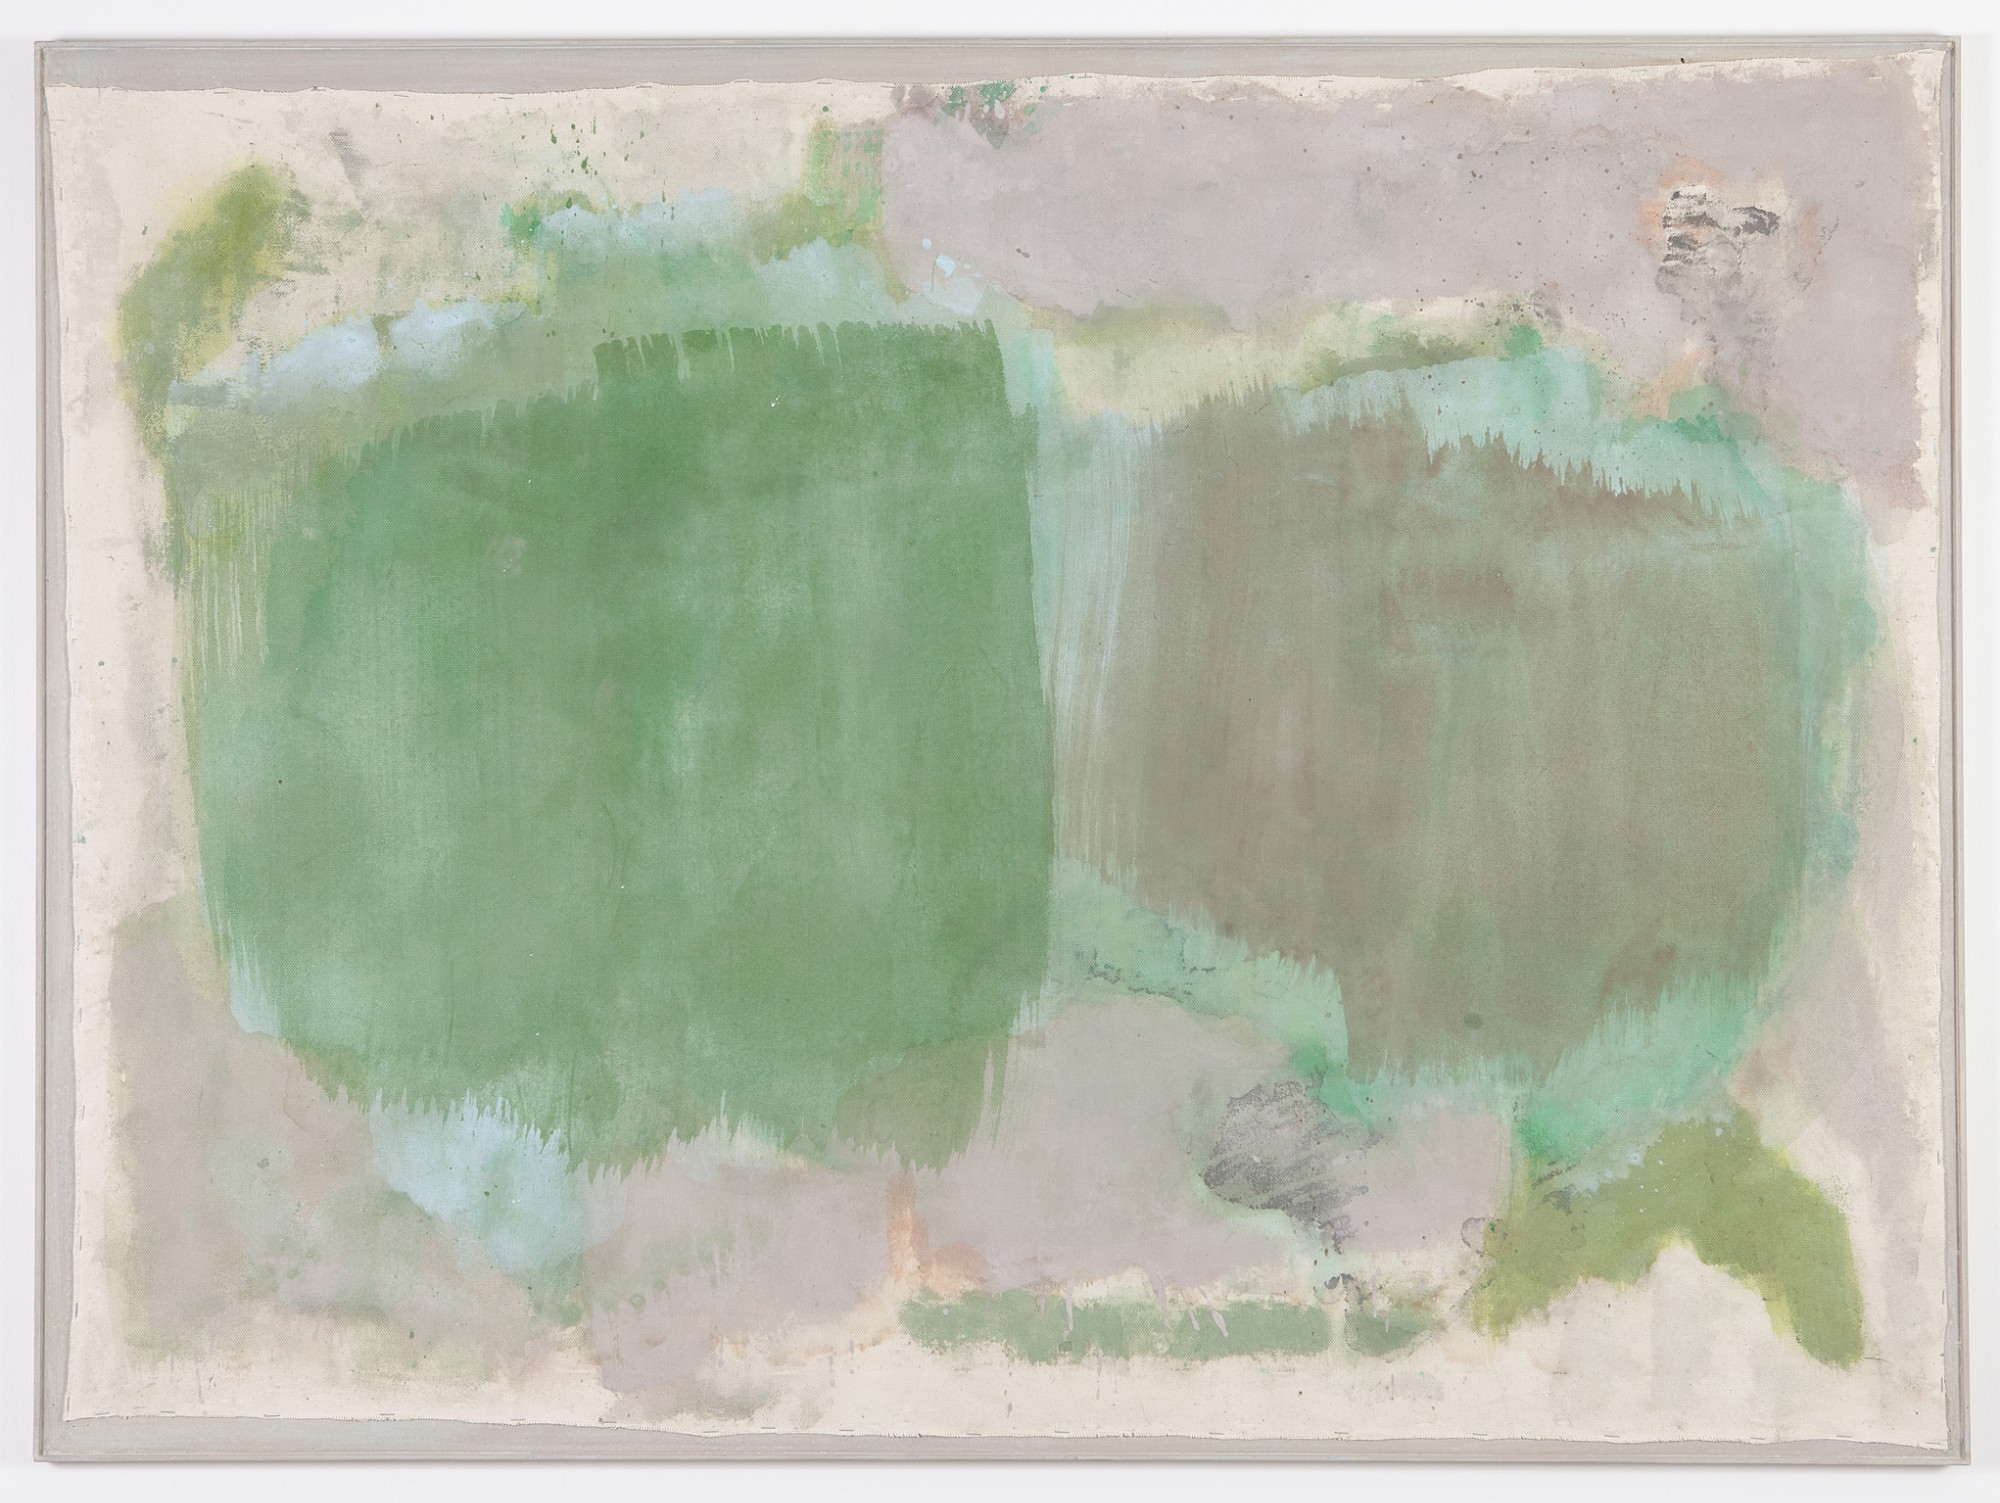 Erwin Gross, Stille Landschaft, 1997, acrylic, pigment on cotton, 109 x 147cm